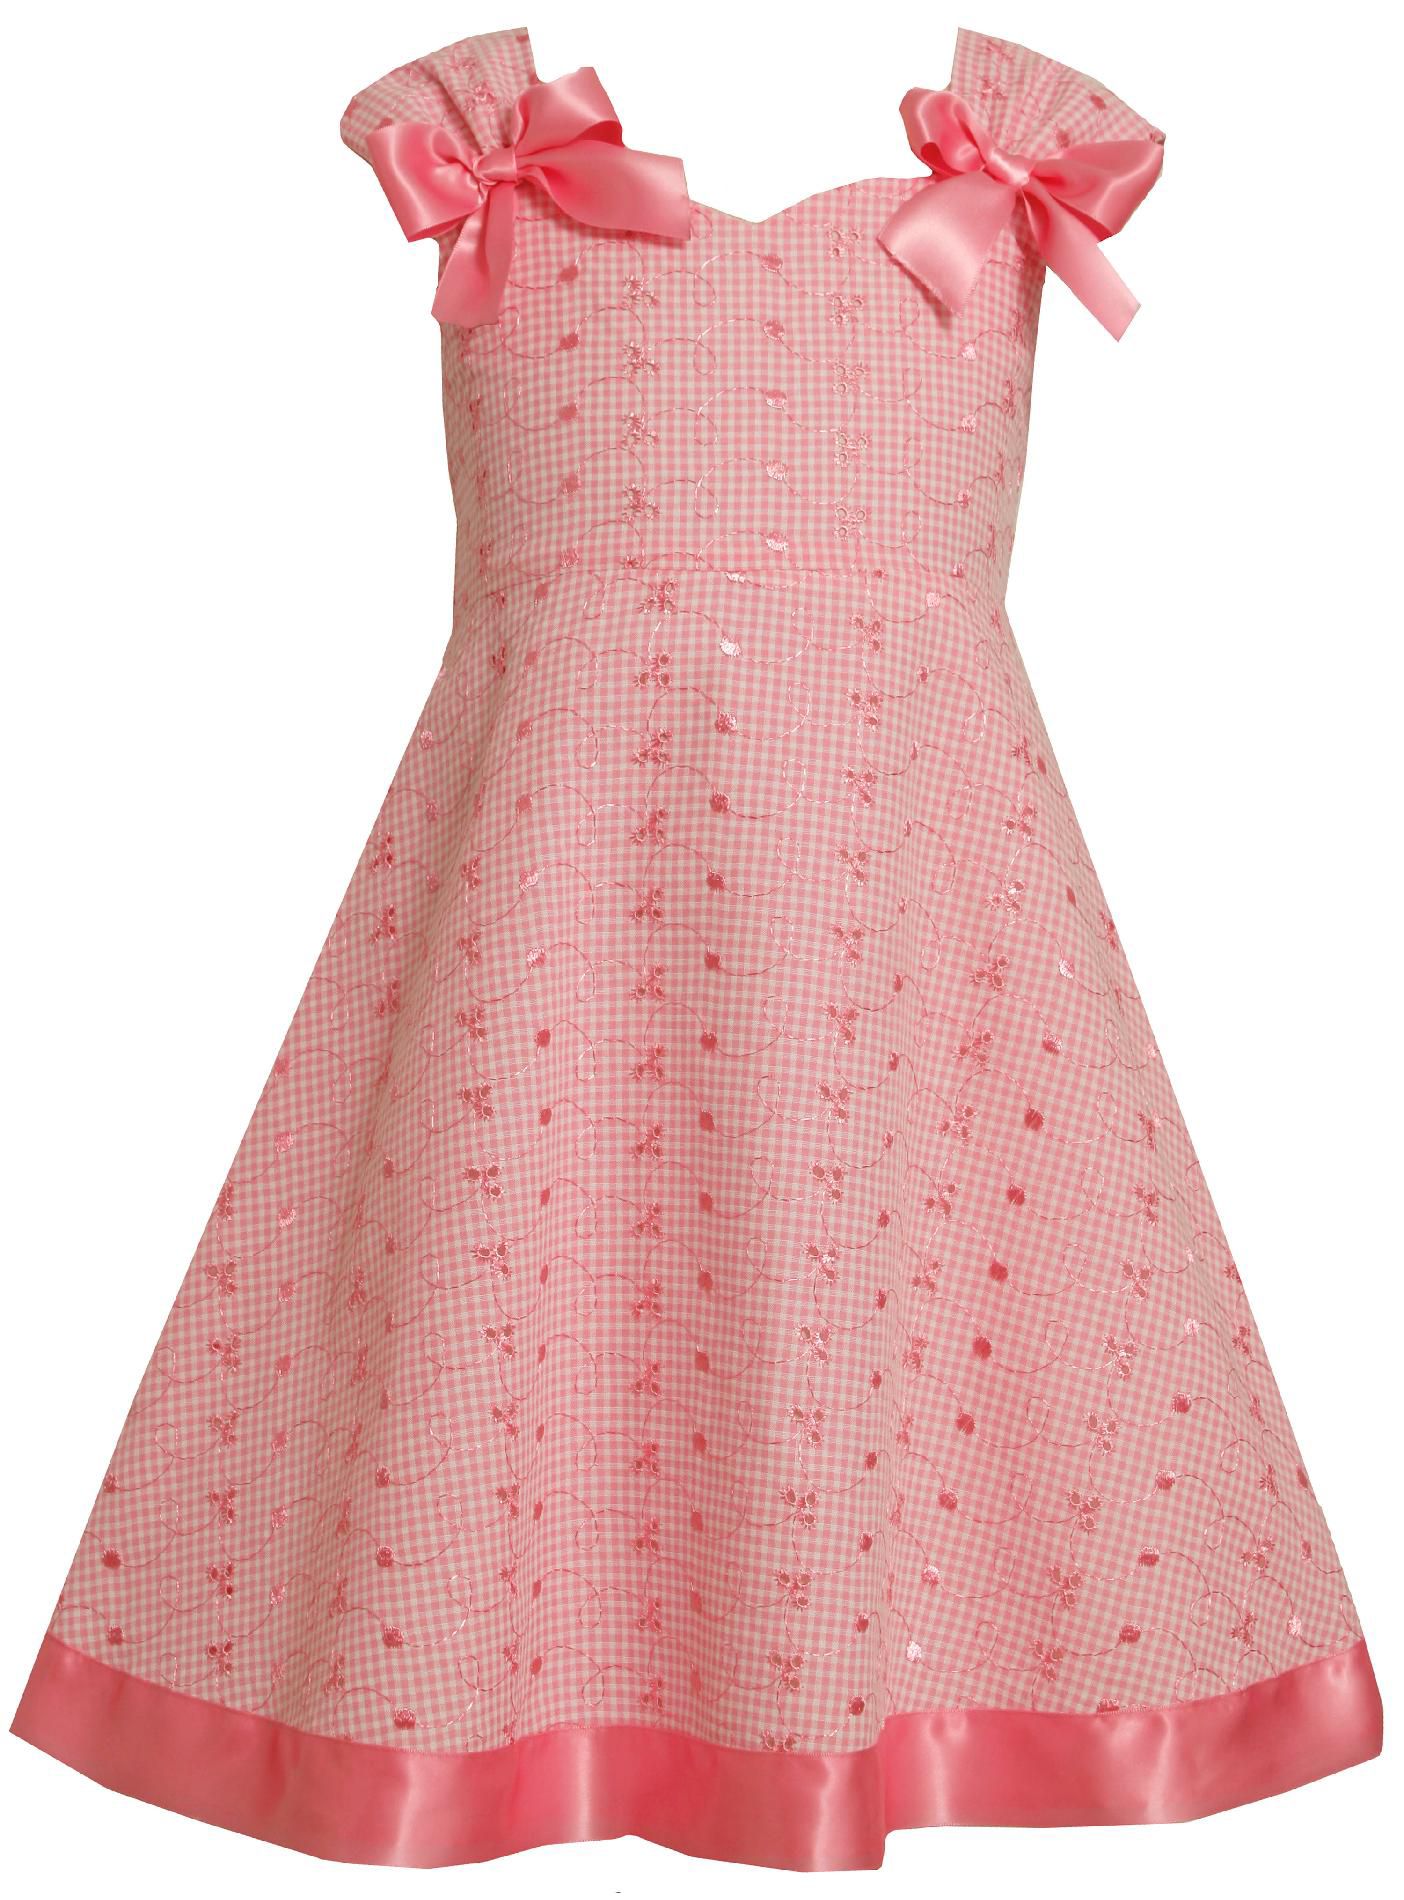 Ashley Ann Girls Sleeveless Dress Bow Shoulder Eyelet Print Pink